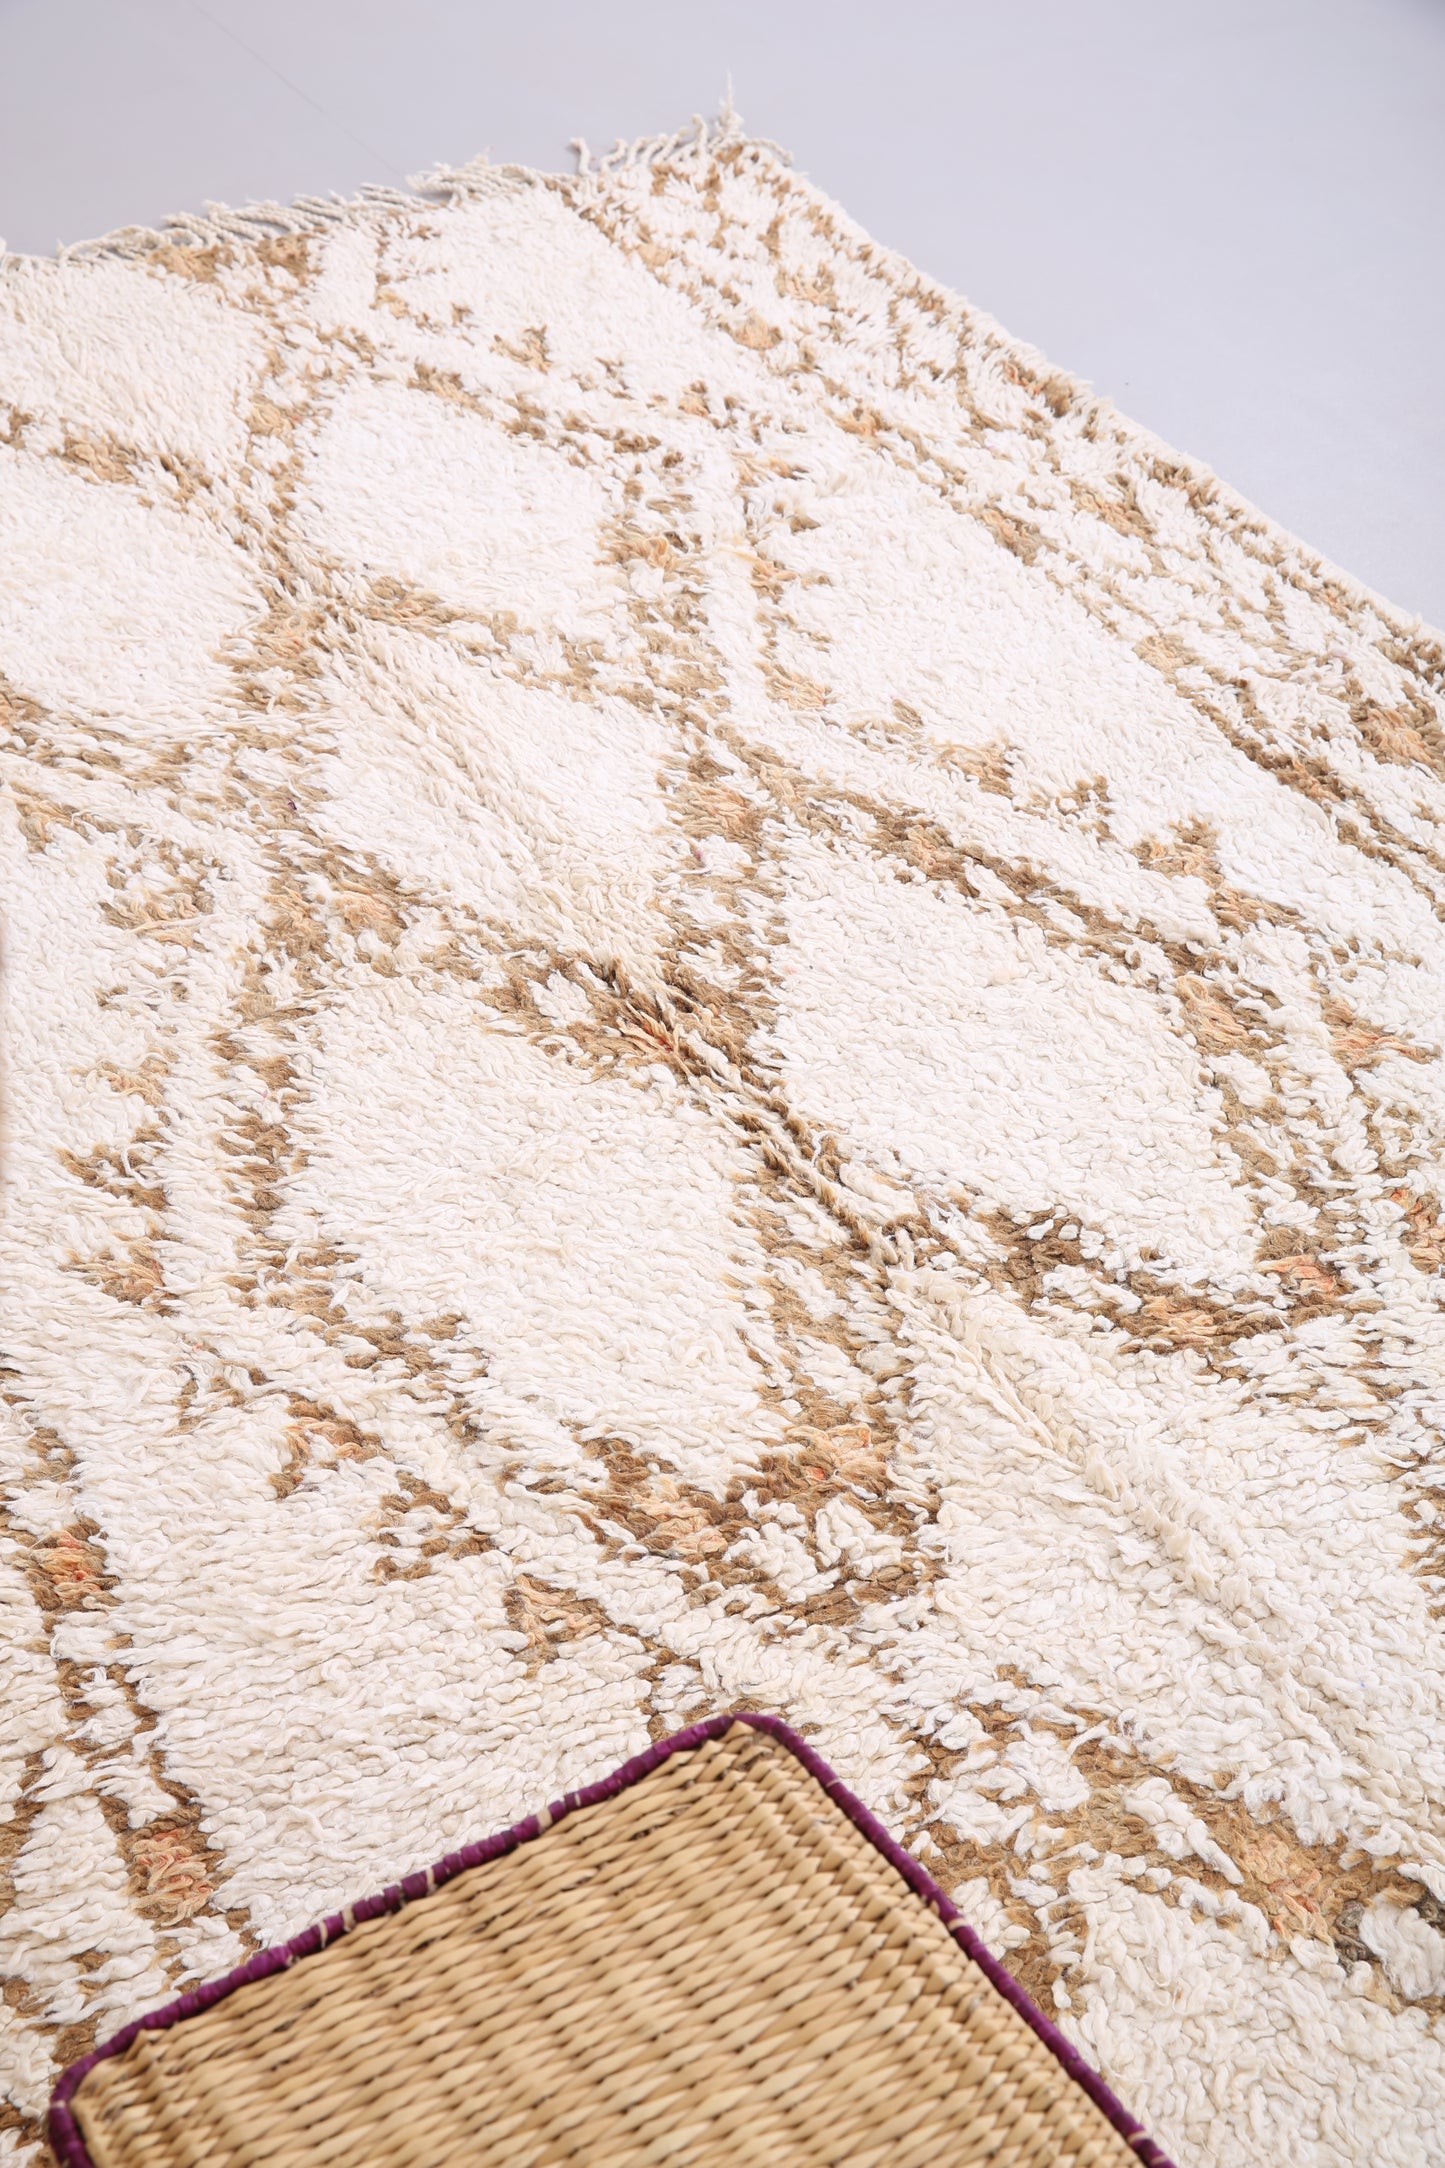 Vintage Beni Ourain blasser Teppich 6 FT x 9 FT - Vintage marokkanischer Teppich - handgemachter Teppich - Marokko blasser Teppich - Boho alter Teppich - Vintage Tribal Teppich